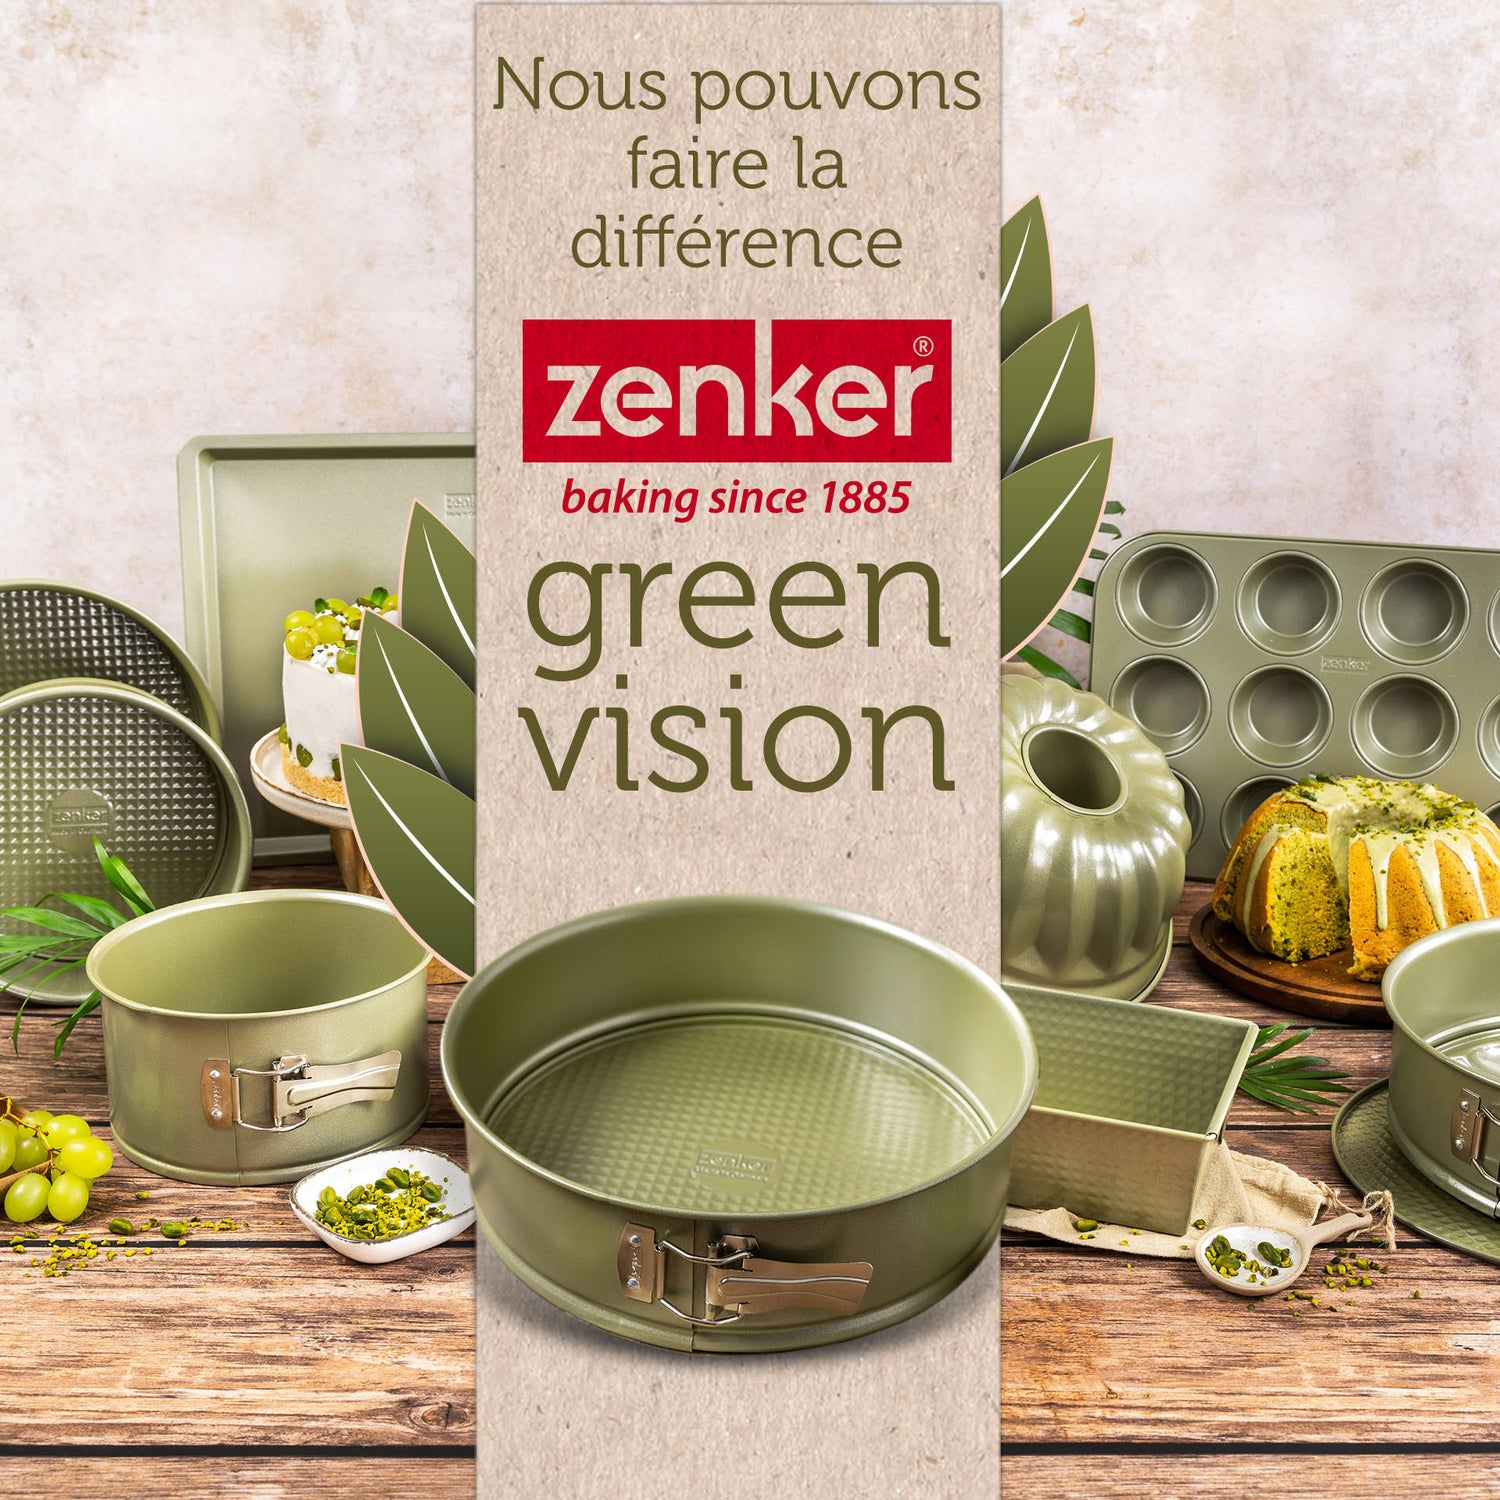 Moule à cake 30 cm Zenker Green Vision